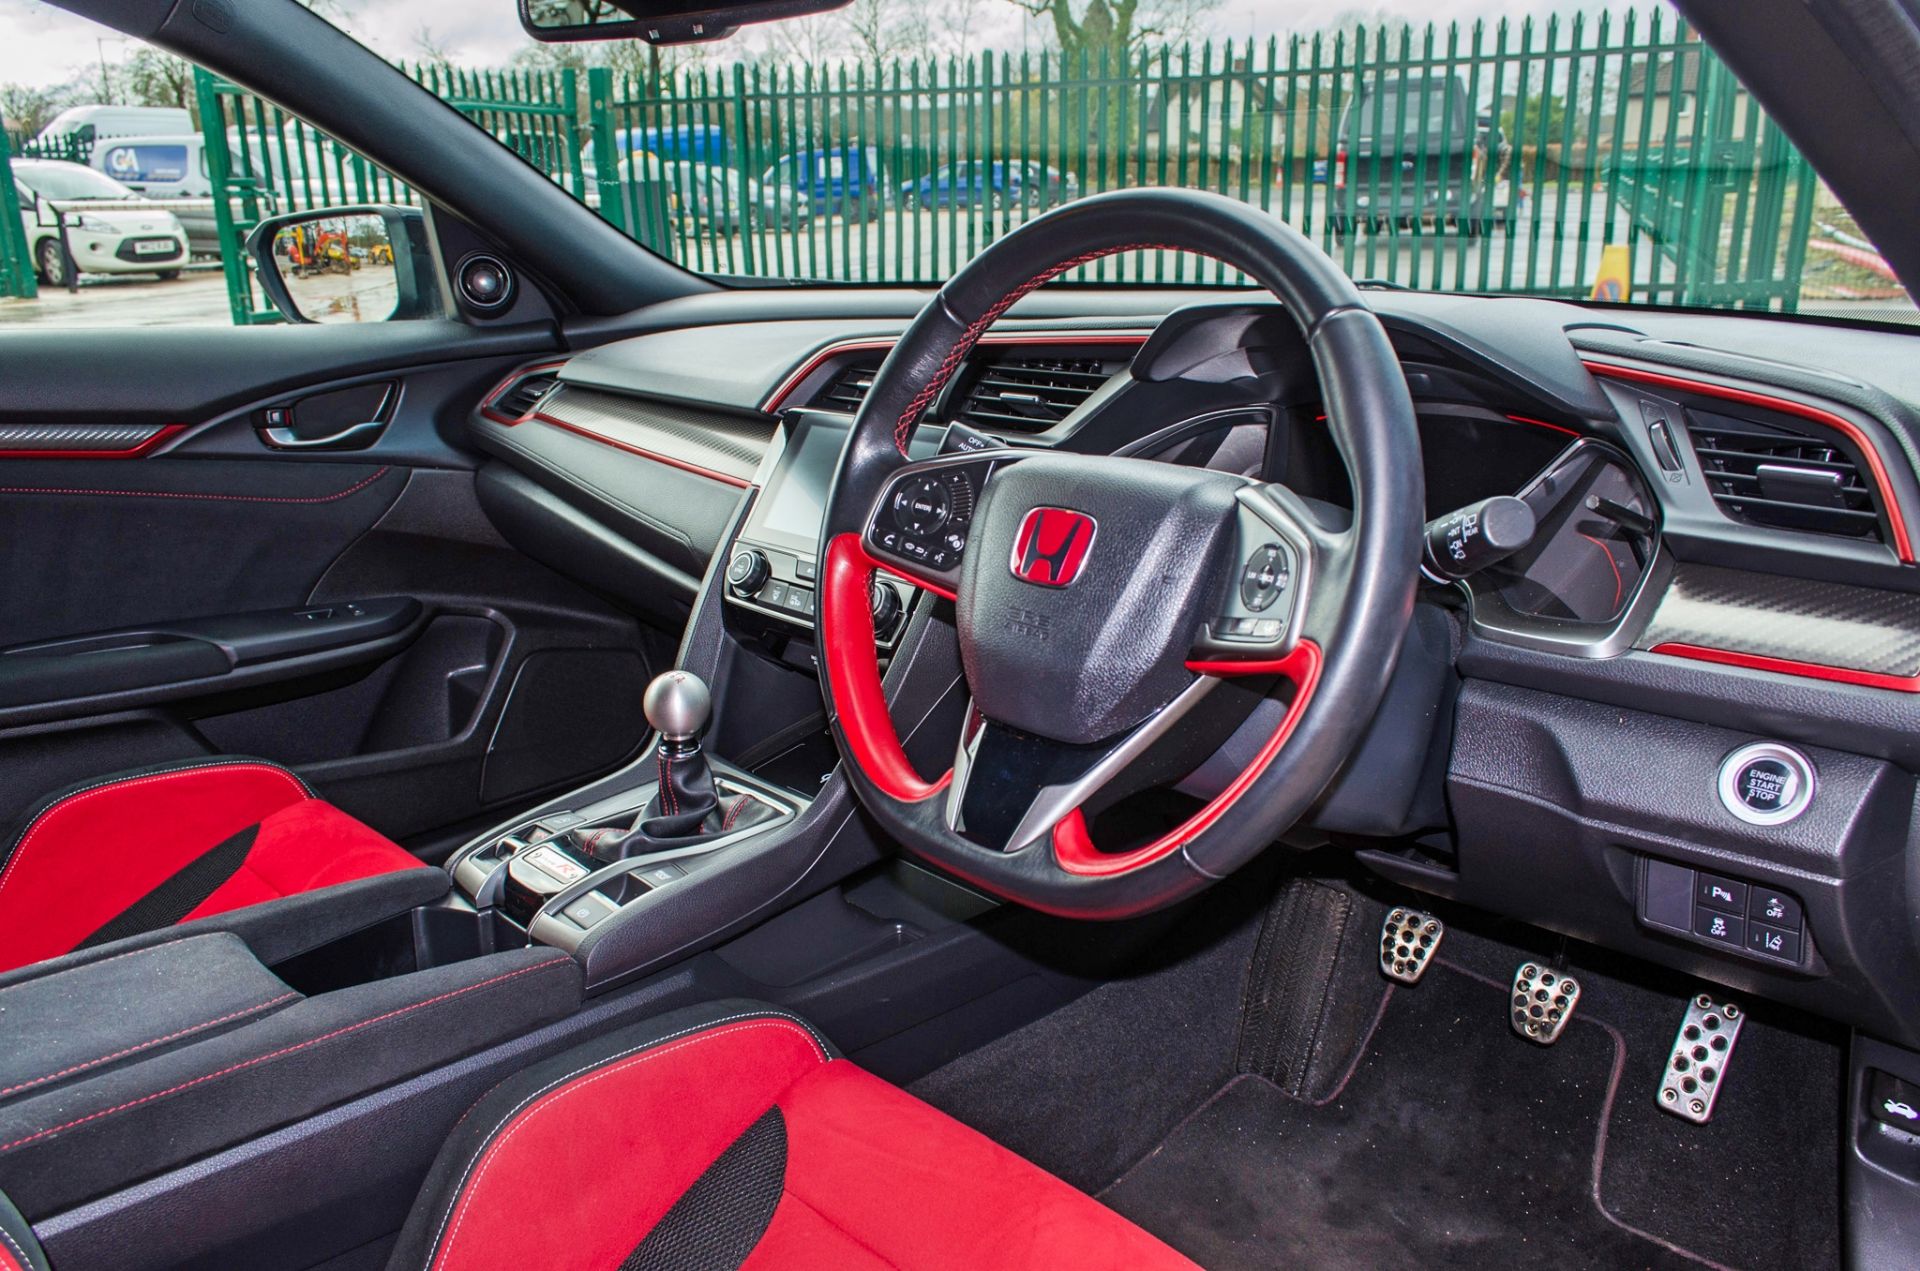 2018 Honda Civic GT Type R V-Tec 1996cc 5 door hatchback - Image 31 of 54